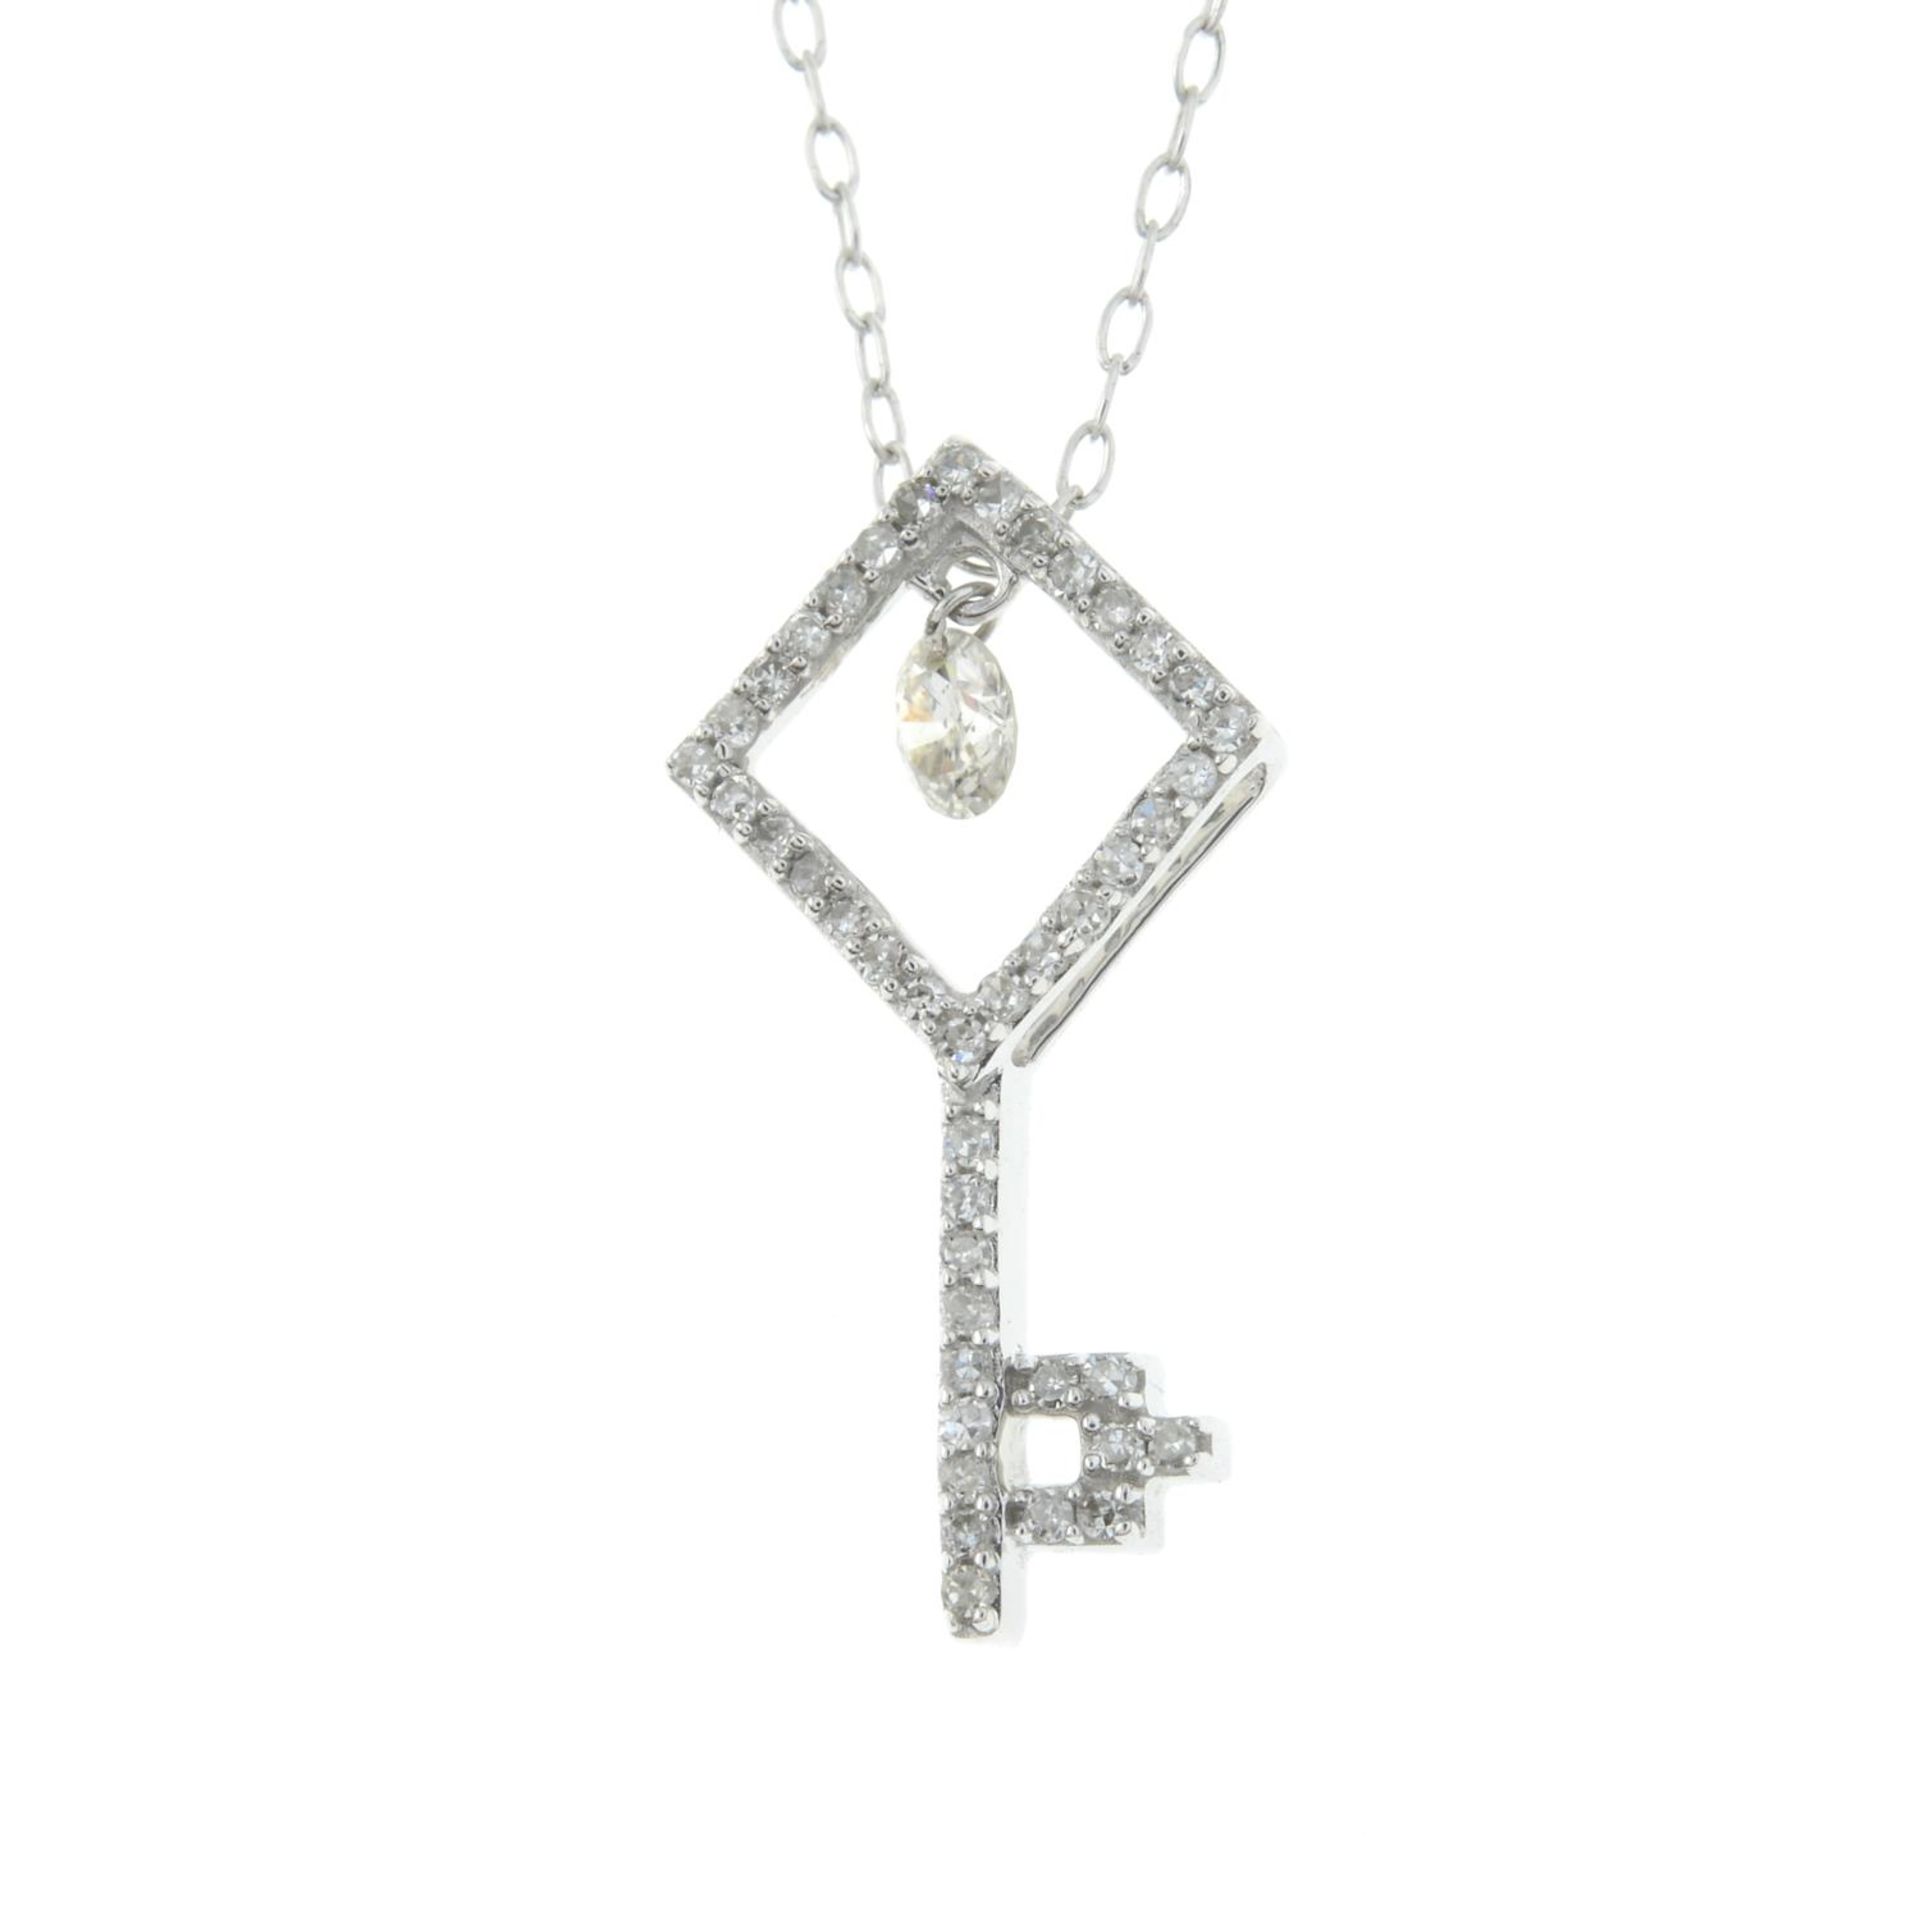 A brilliant-cut diamond key pendant, with chain.